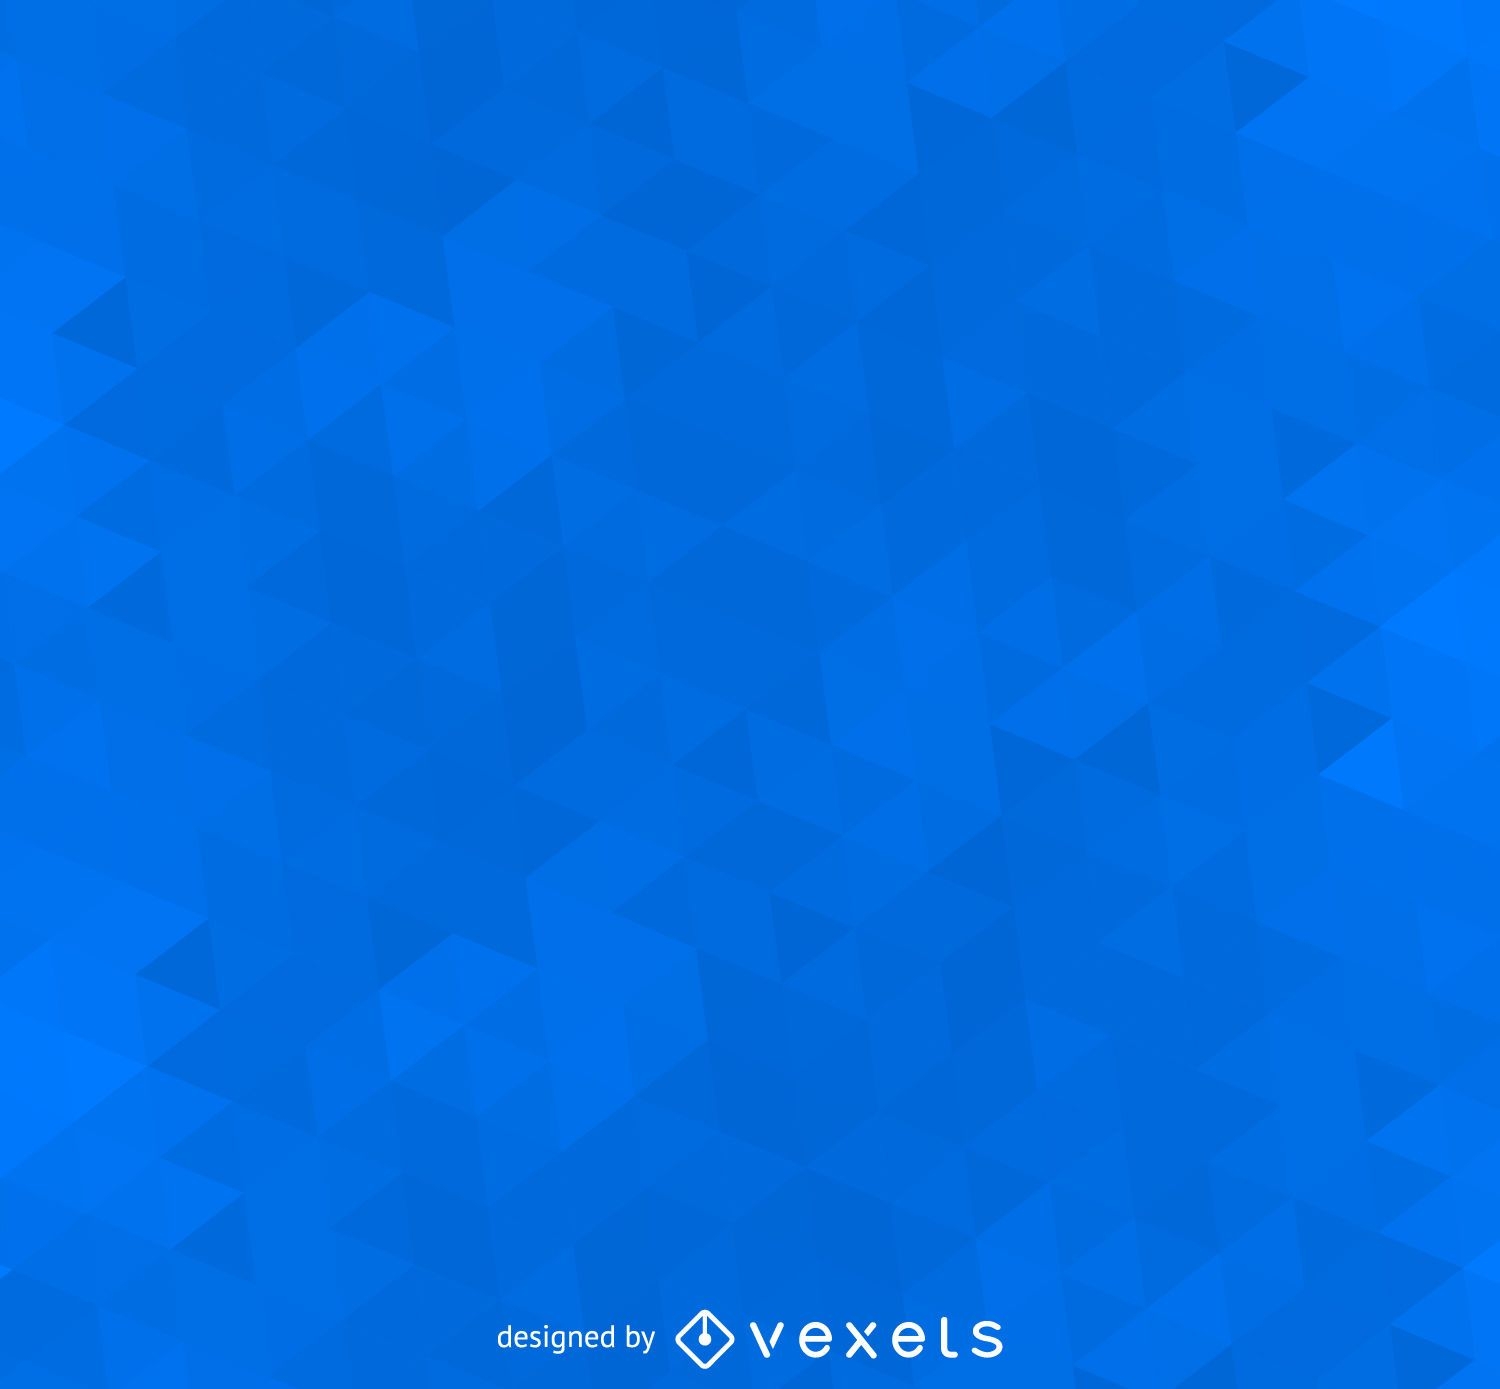 Geometric polygonal blue background